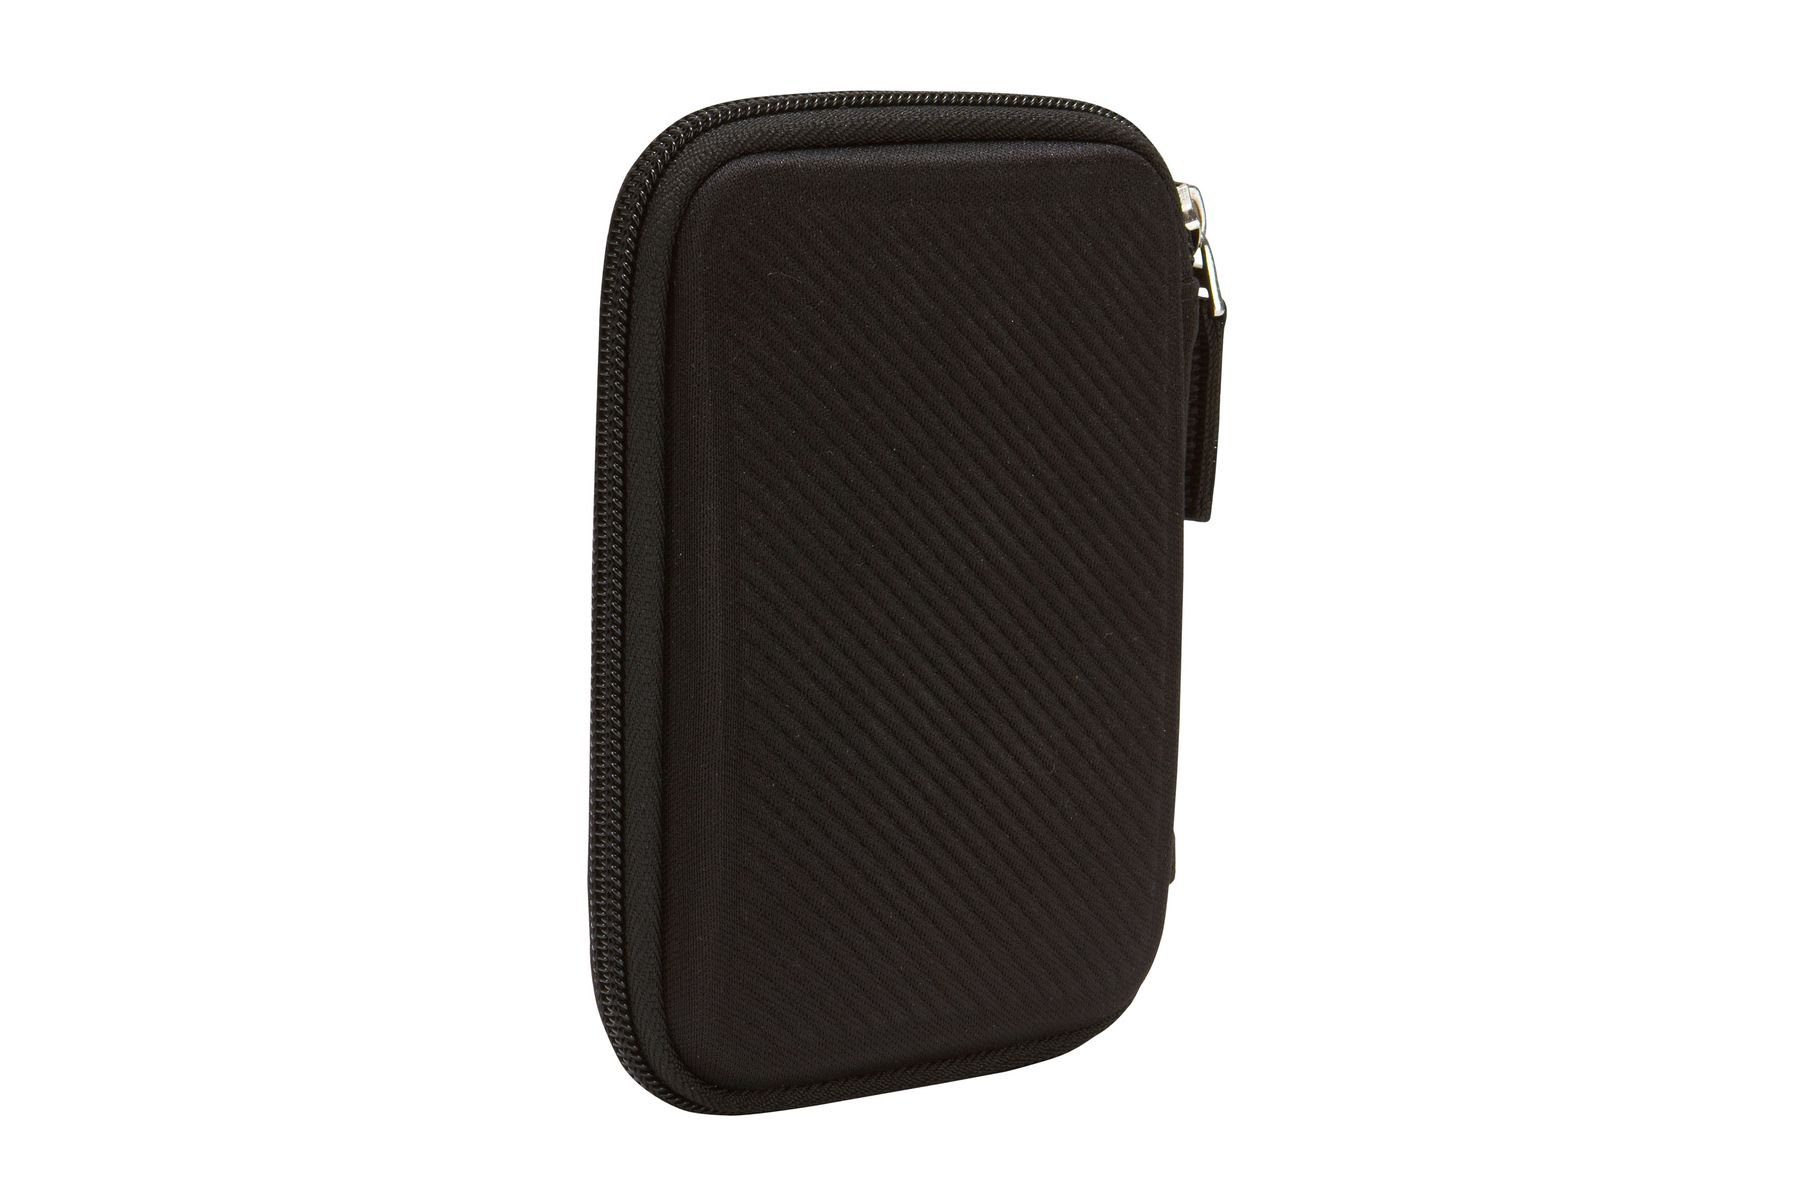 Case Logic Portable Hard Drive Case - back